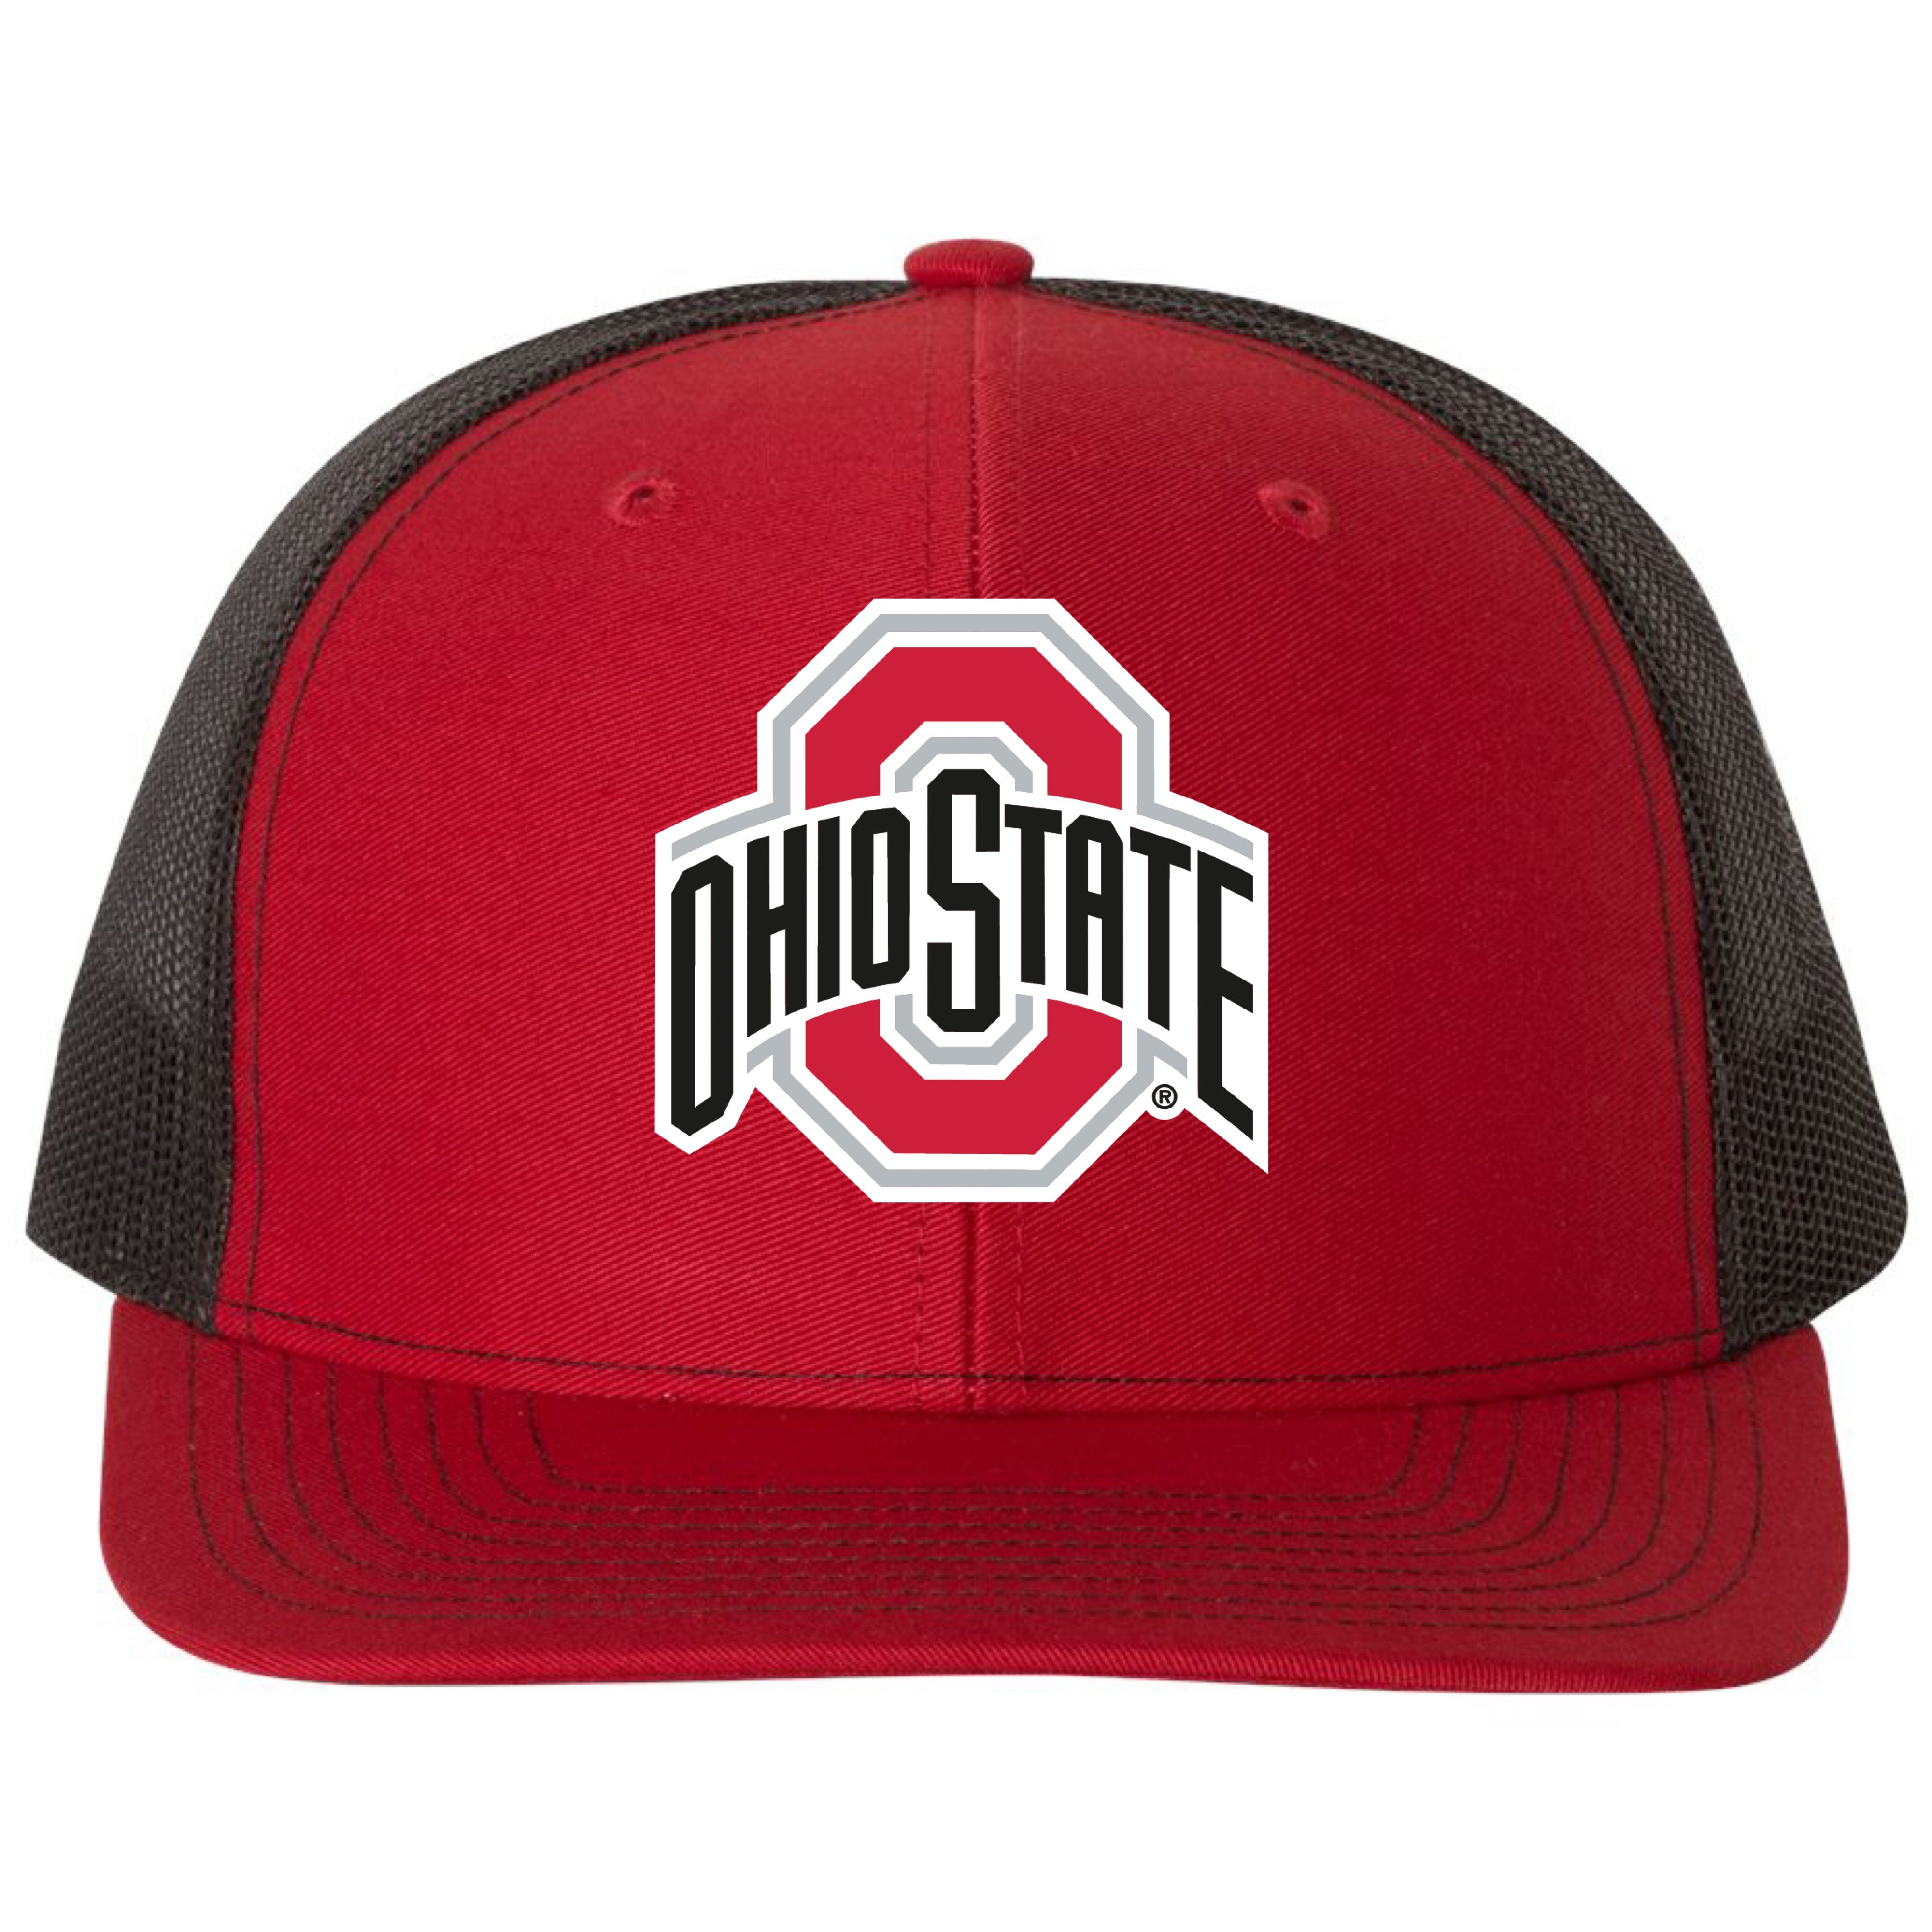 Ohio State Buckeyes 3D Snapback Trucker Hat- Red/ Black